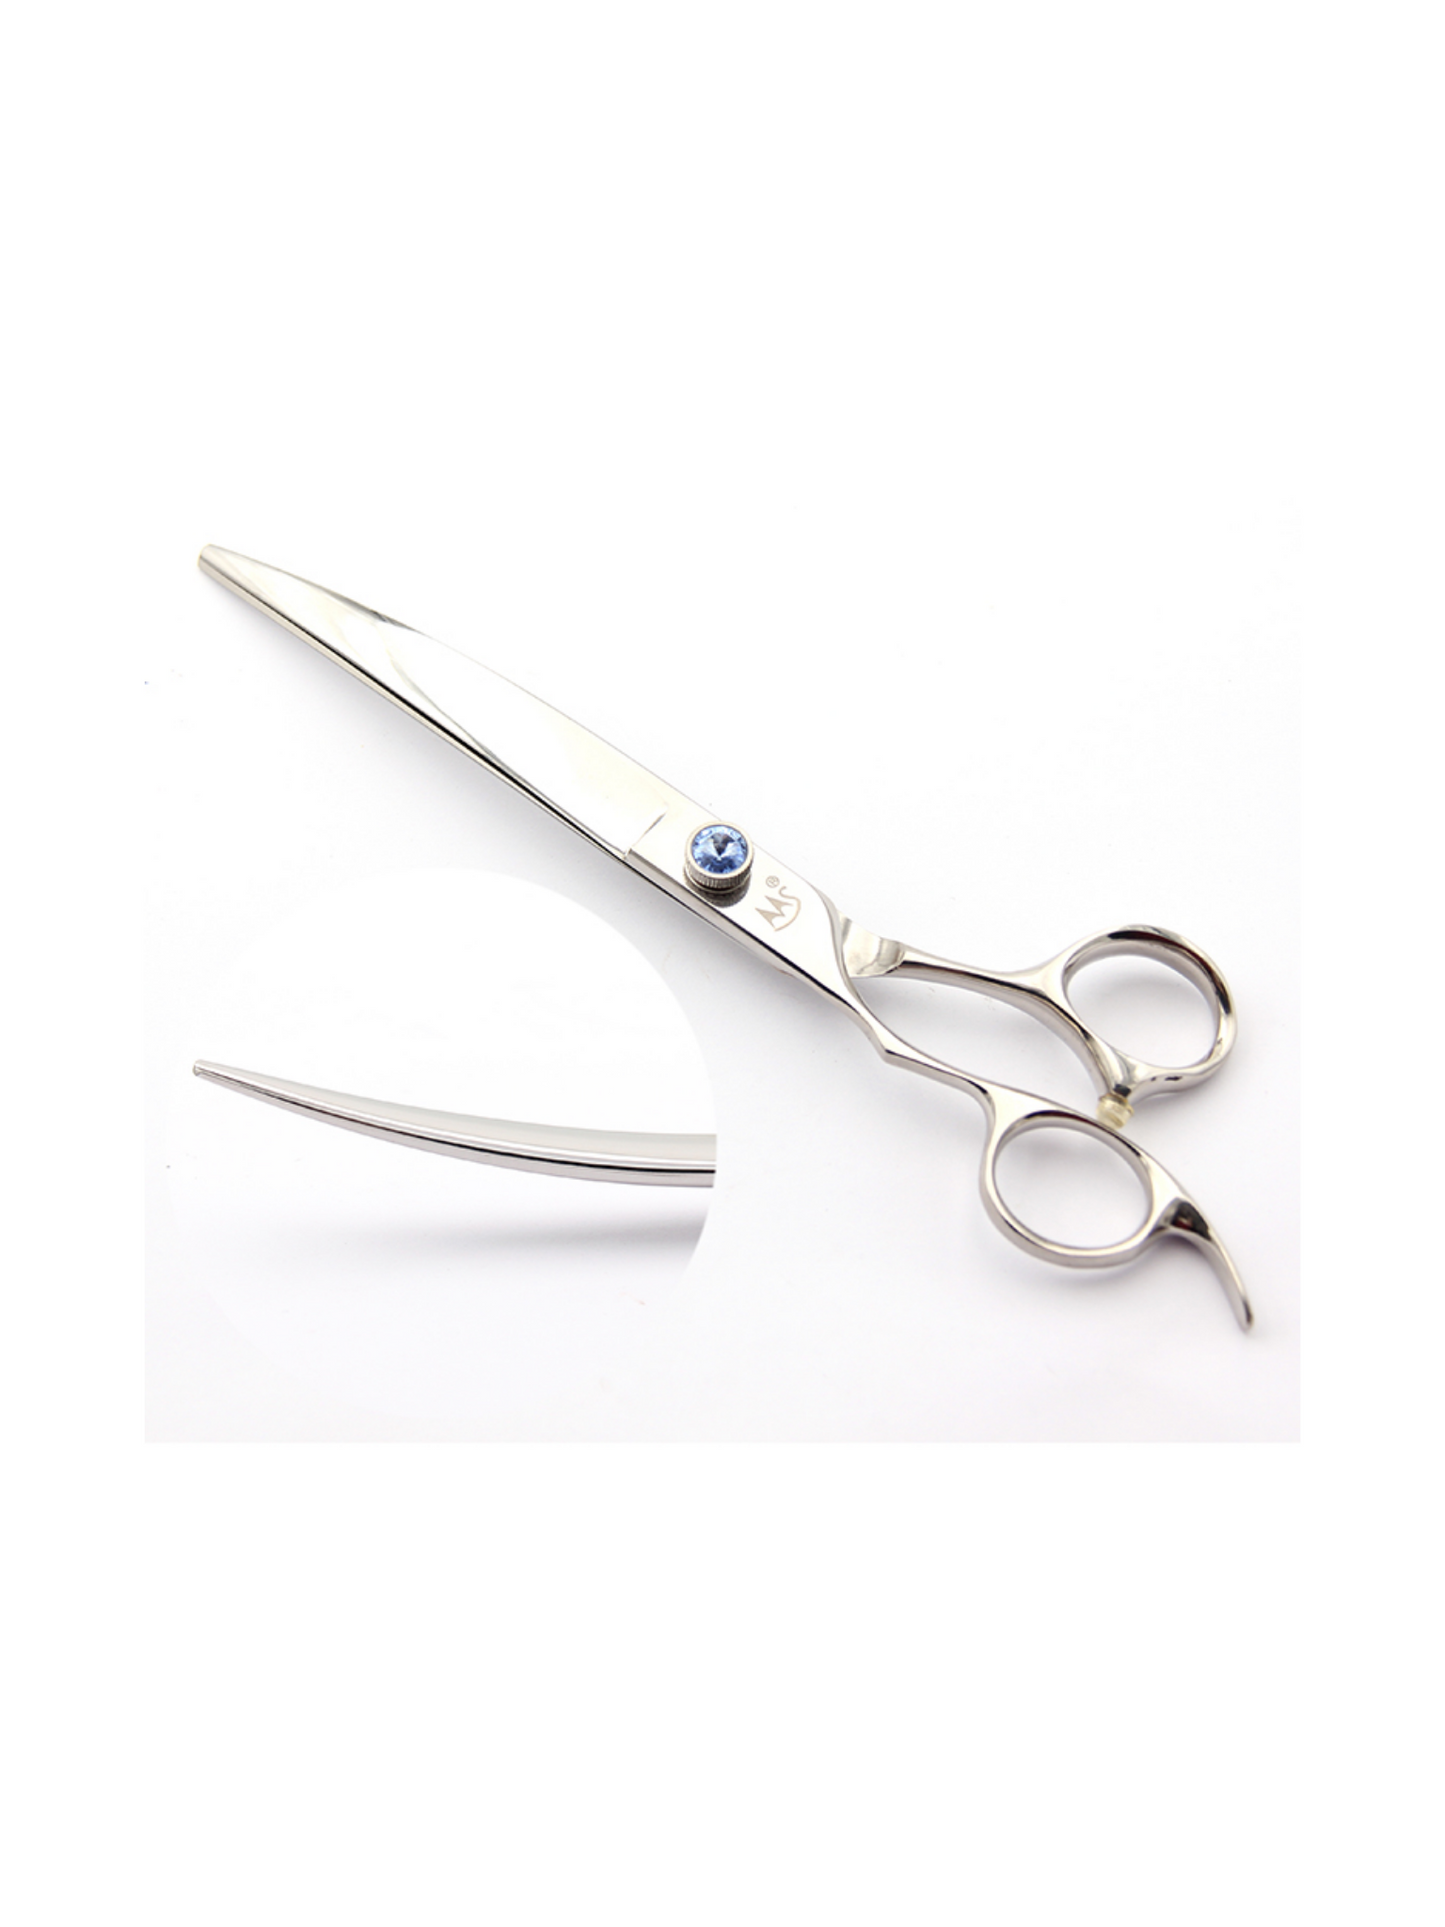 F2FQ-75 professional curved scissors 7.5" (LH)